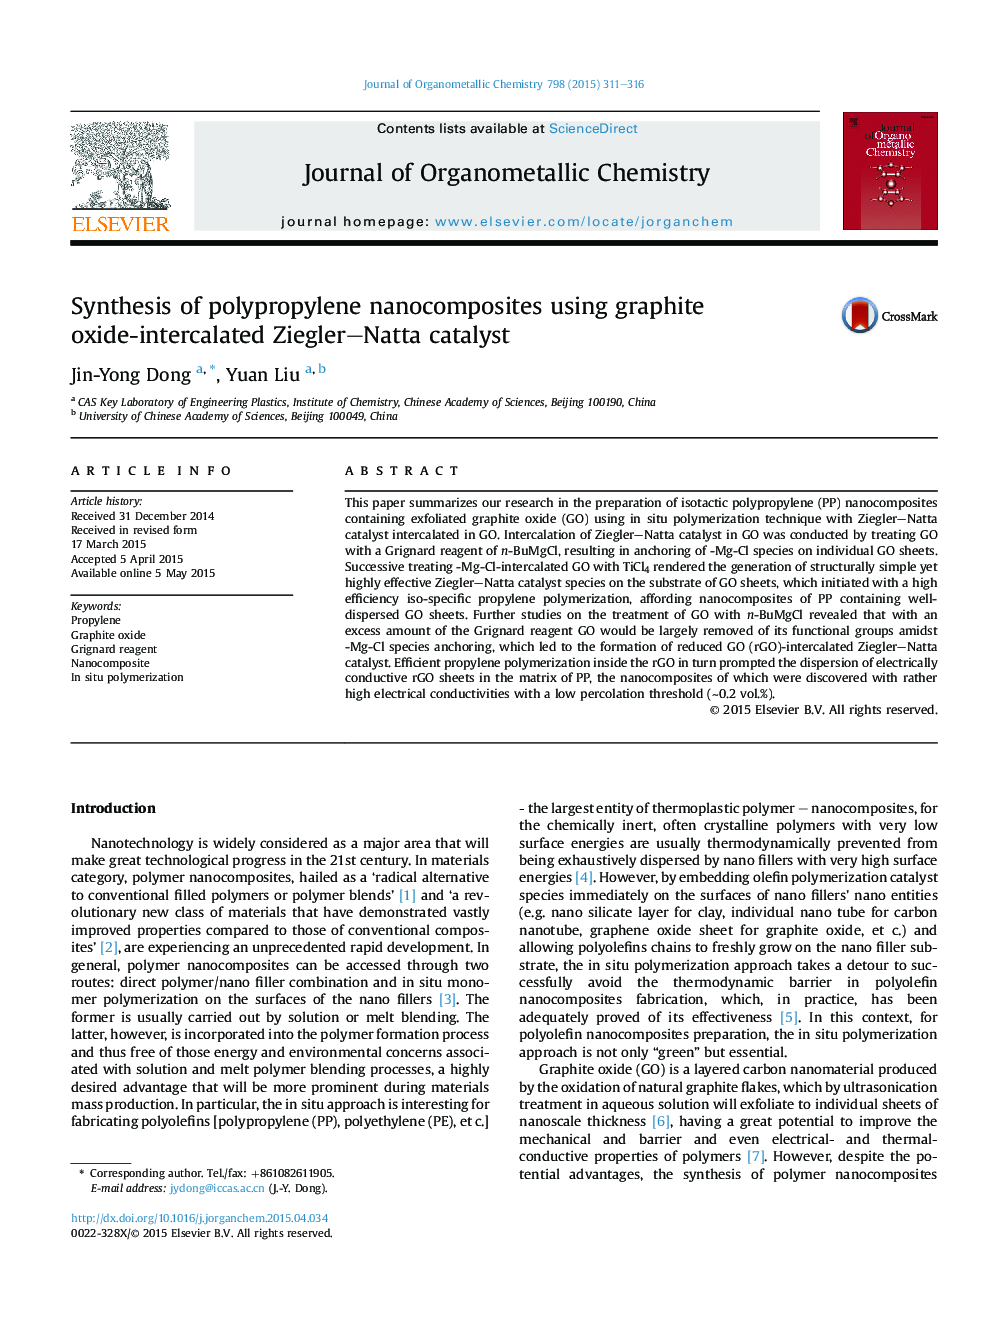 Synthesis of polypropylene nanocomposites using graphite oxide-intercalated Ziegler–Natta catalyst